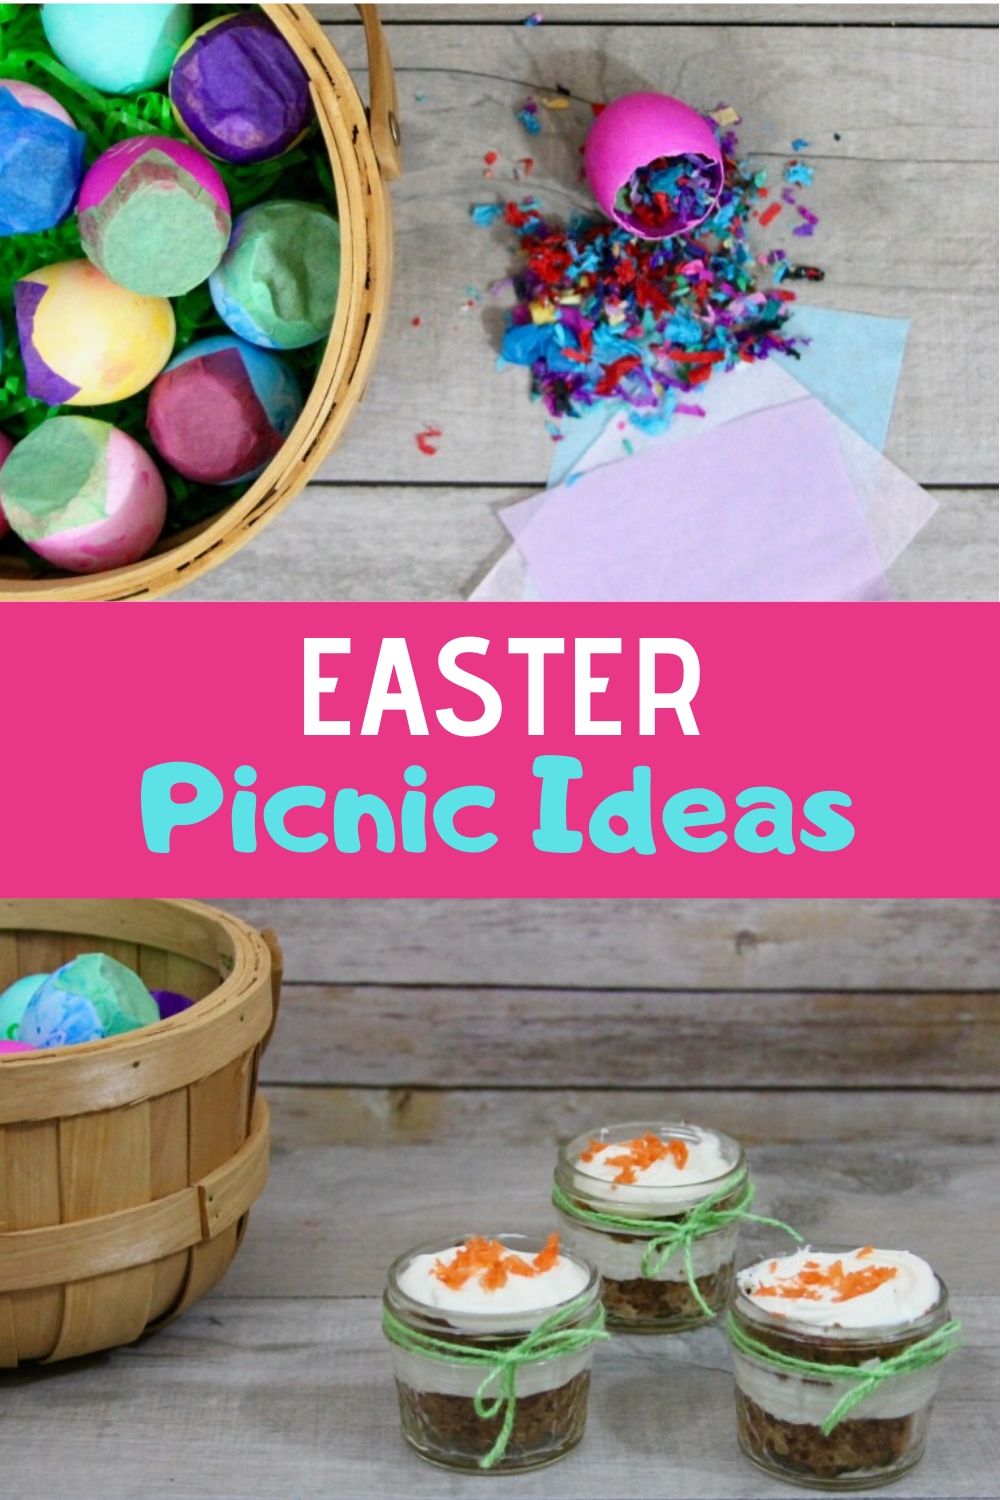 Easy Easter picnic ideas